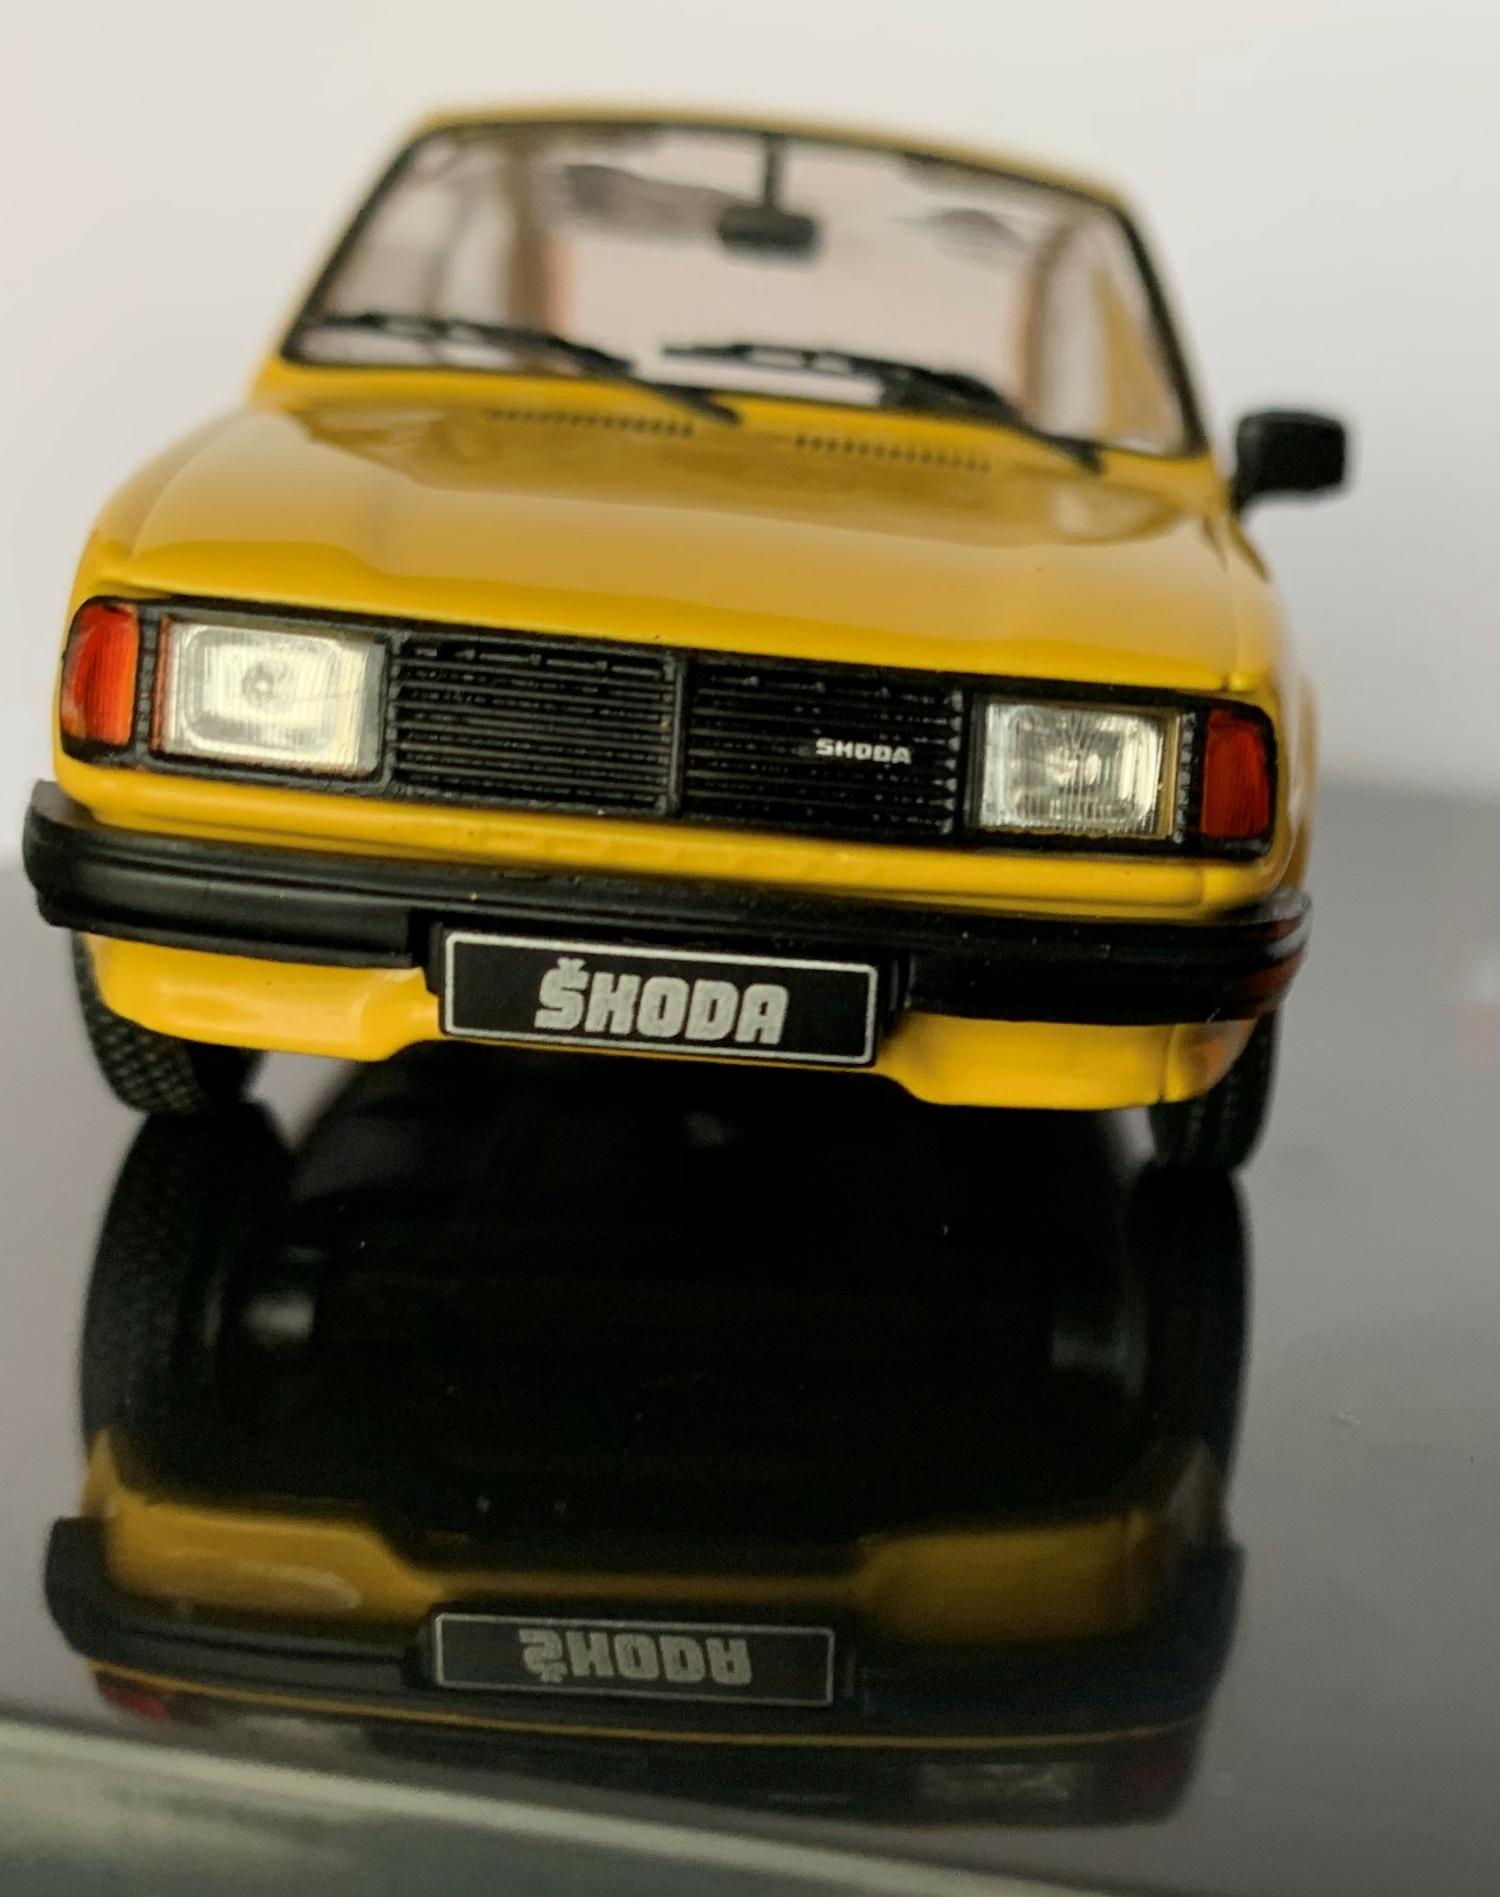 Skoda 120L 1983 in yellow 1:43 scale model from IXO